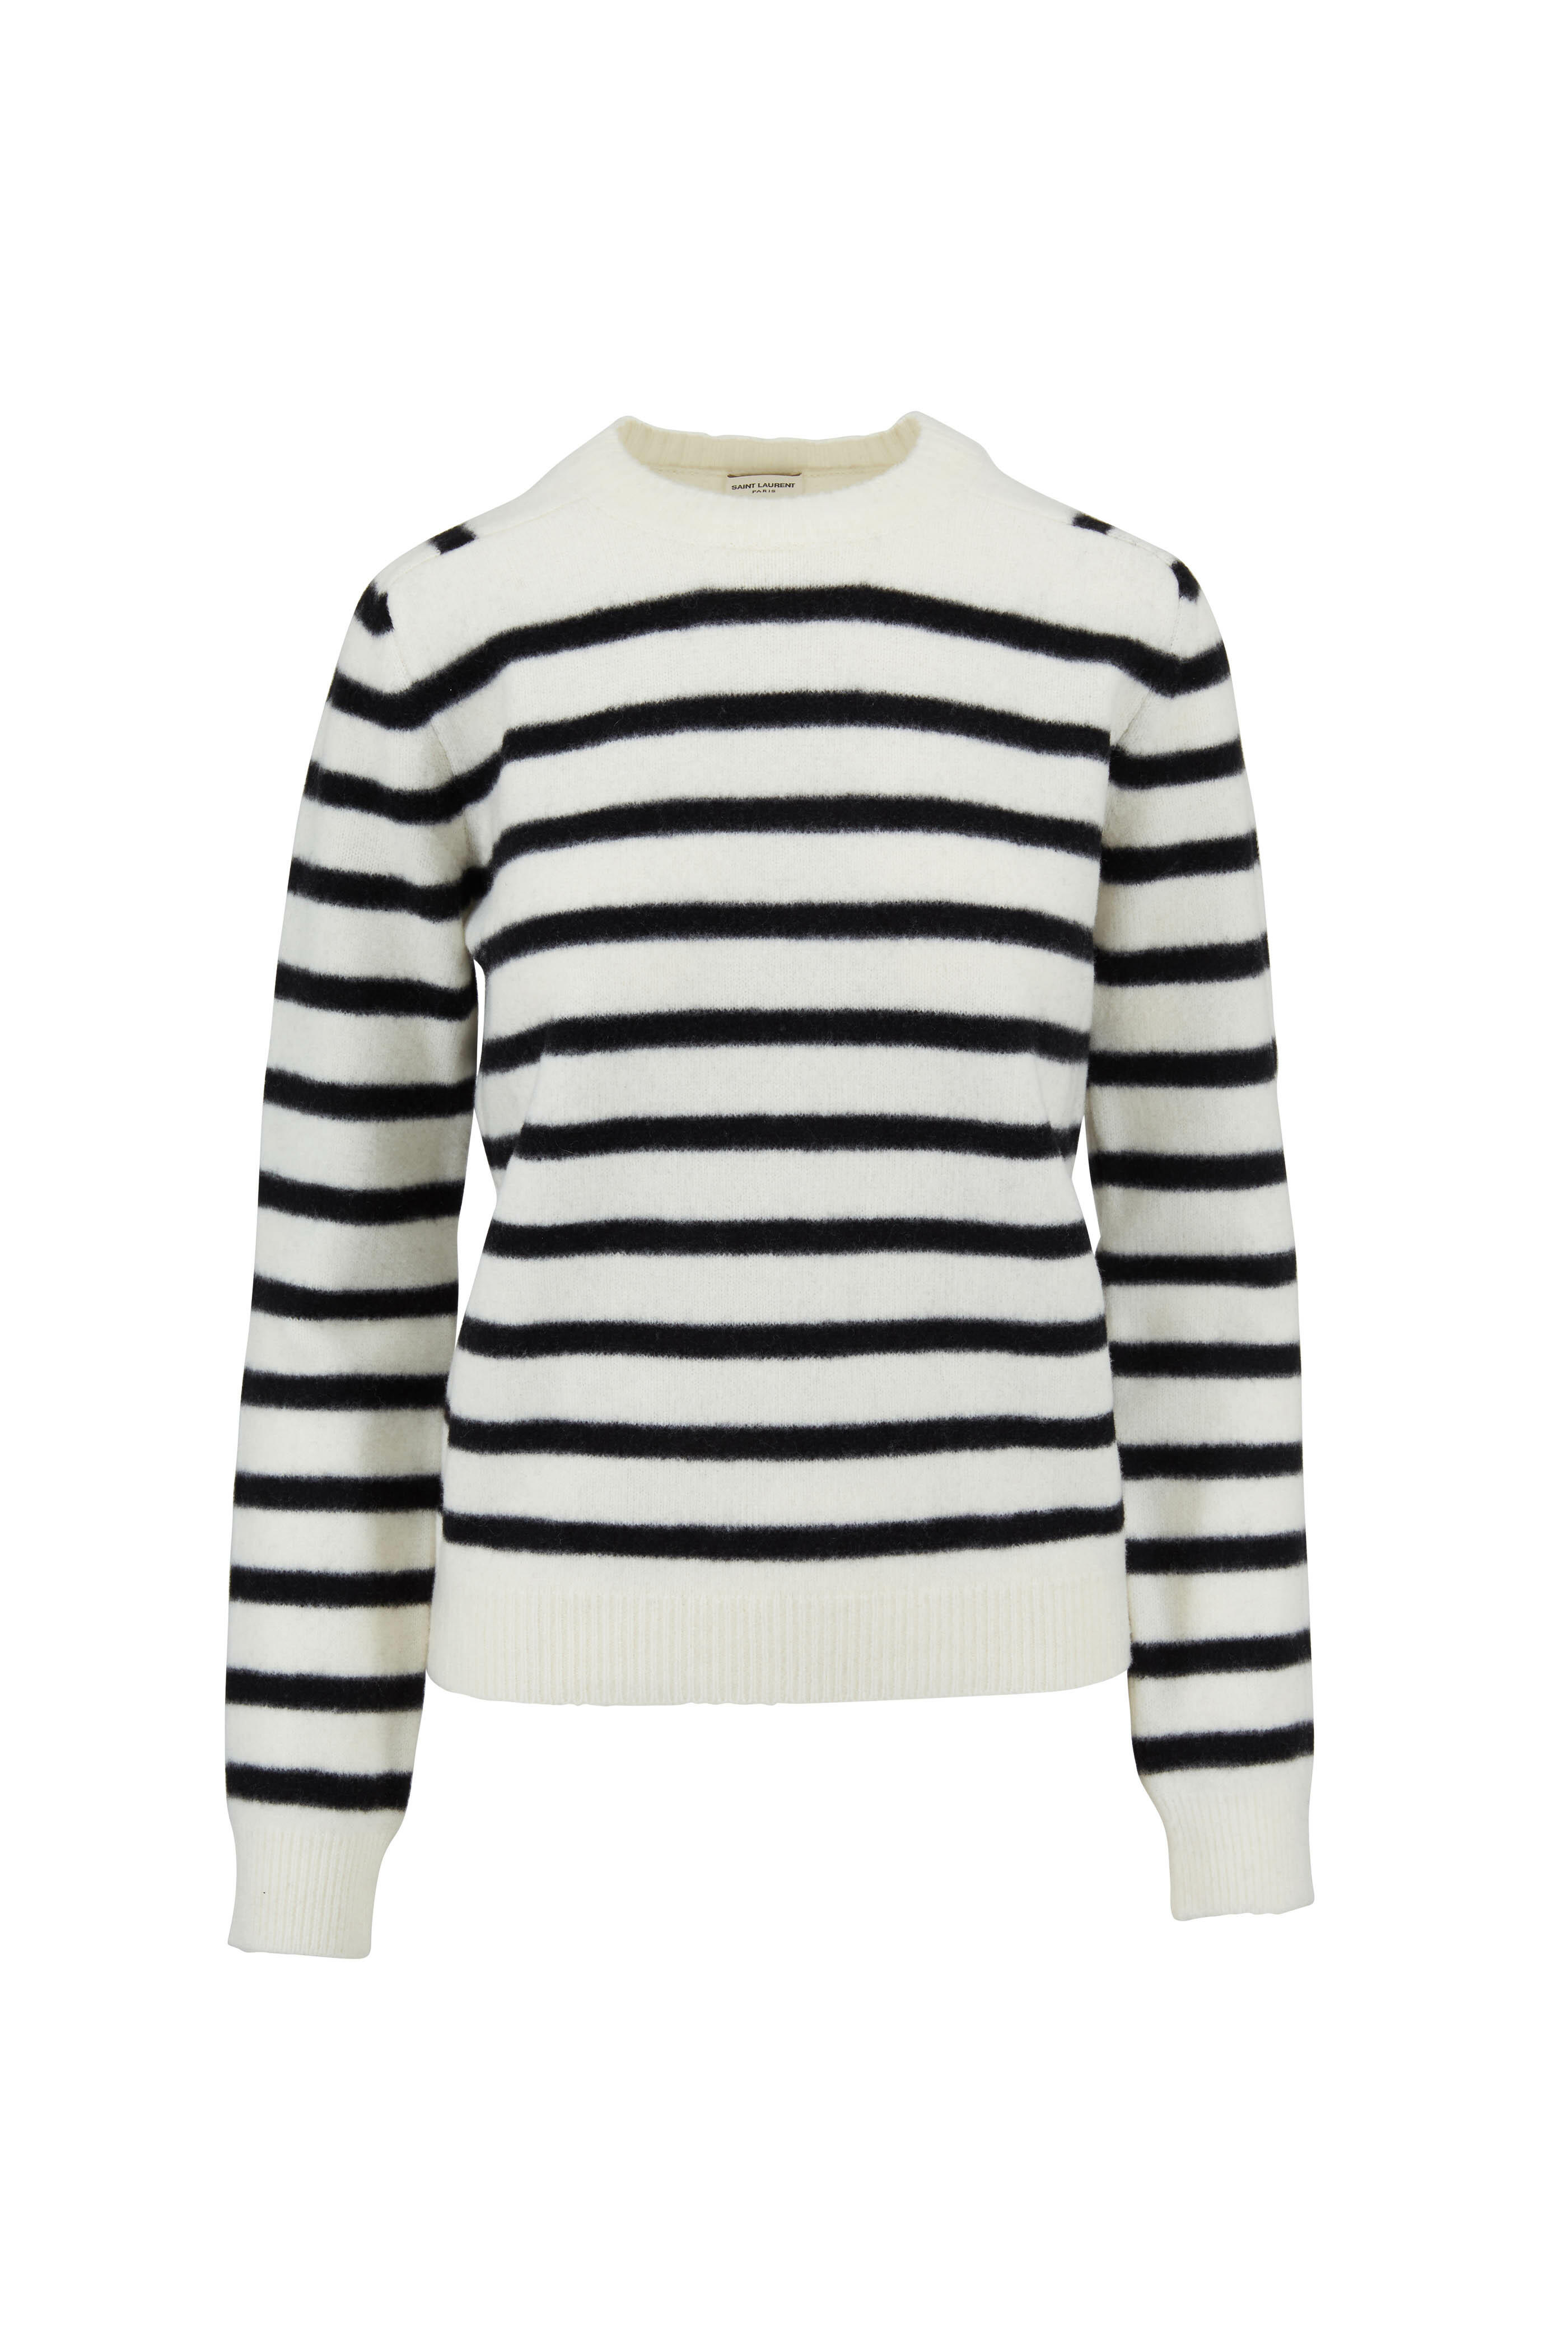 Saint Laurent - White & Black Wool Striped Sweater